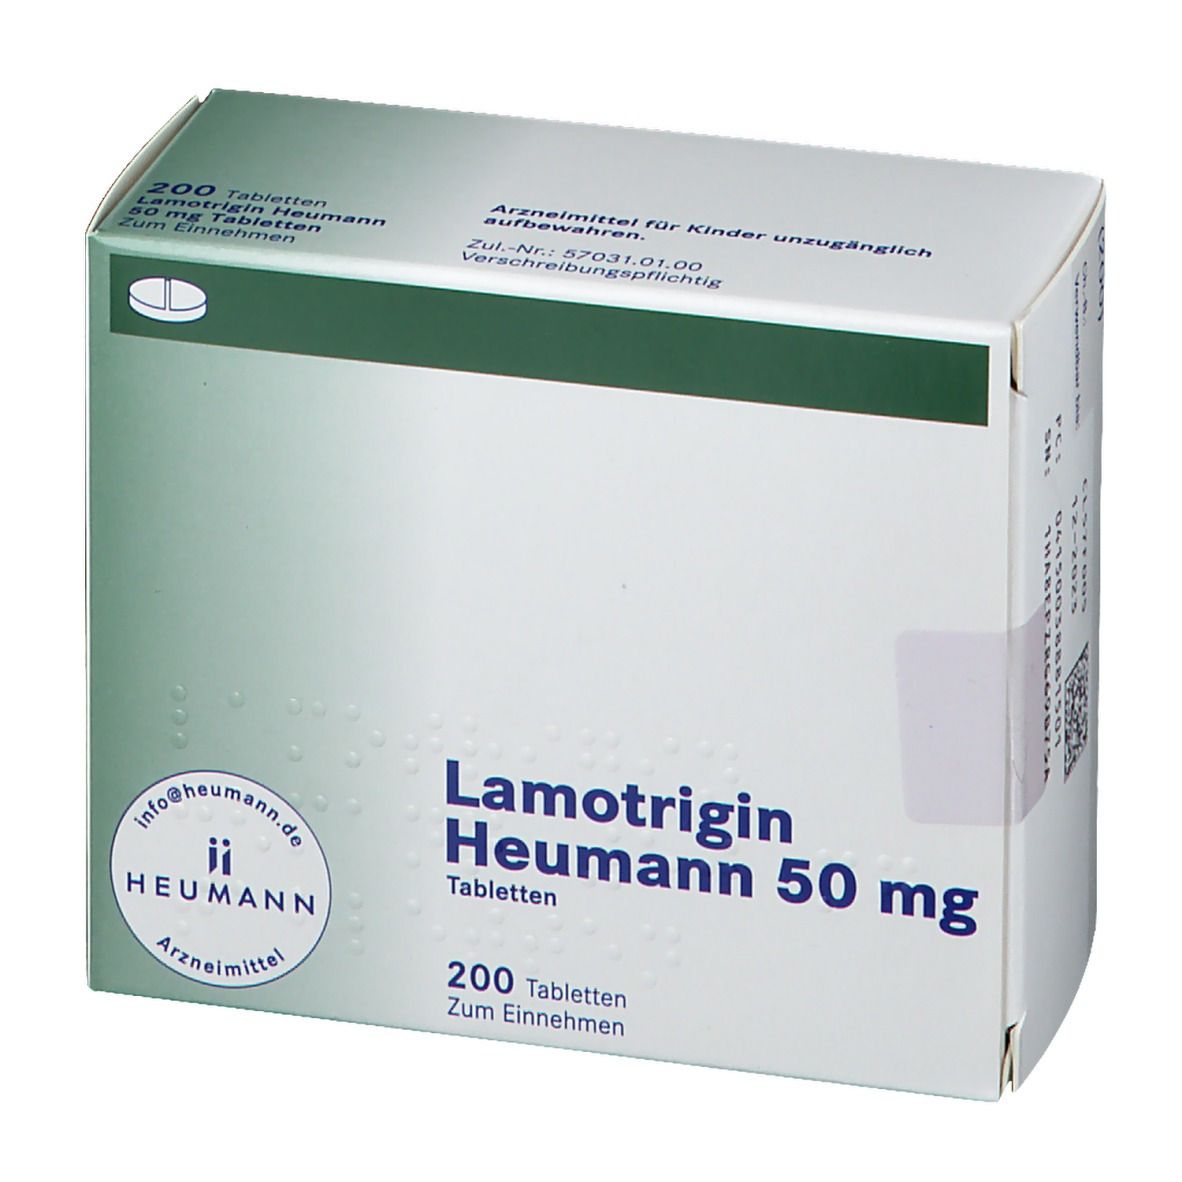 Lamotrigin Heumann 50 mg